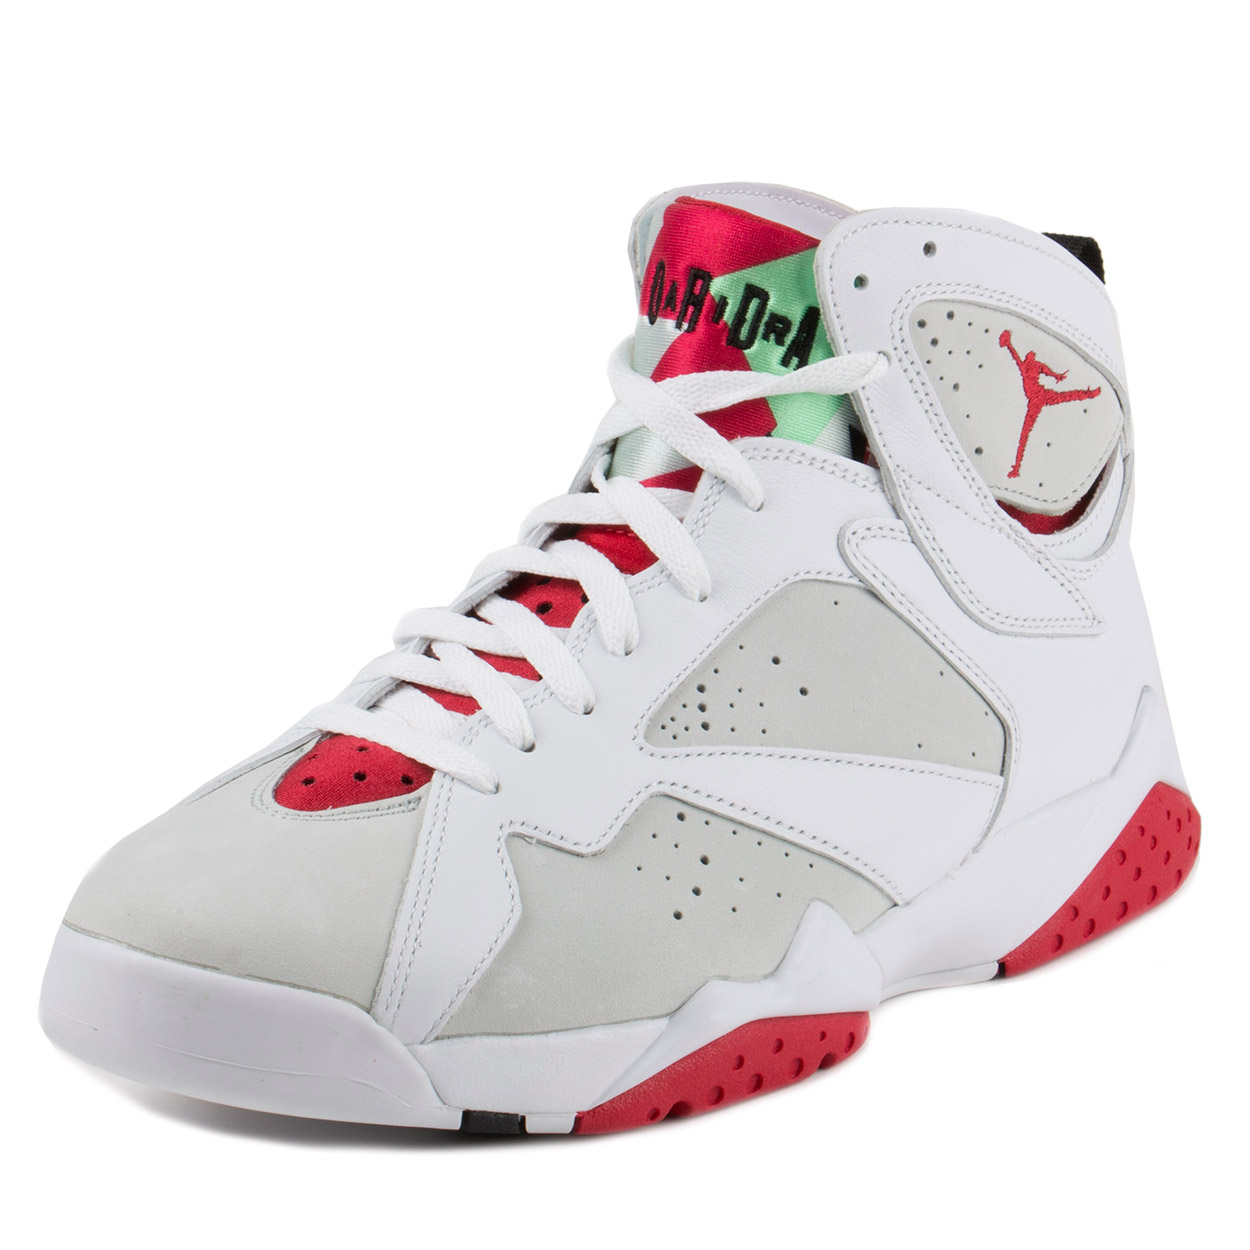 Nike Mens Air Jordan 7 Retro "Hare" White/True Red-Light Silver 304775-125 - image 1 of 5